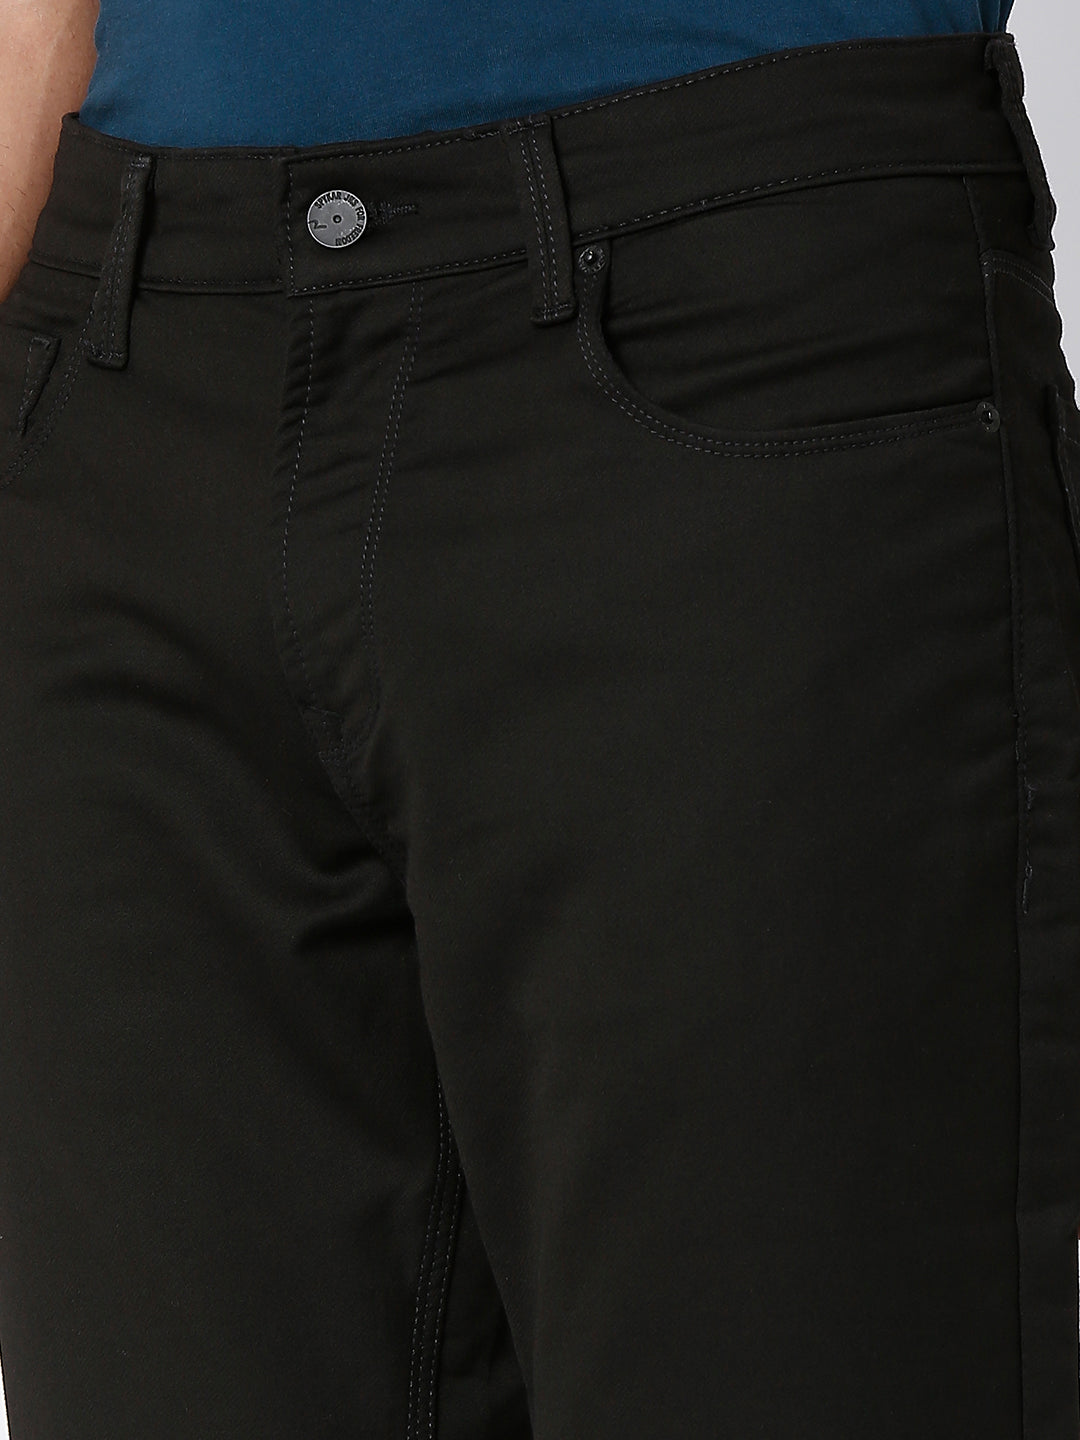 Spykar Black Cotton Comfort Fit Straight Length Jeans For Men (Ricardo)